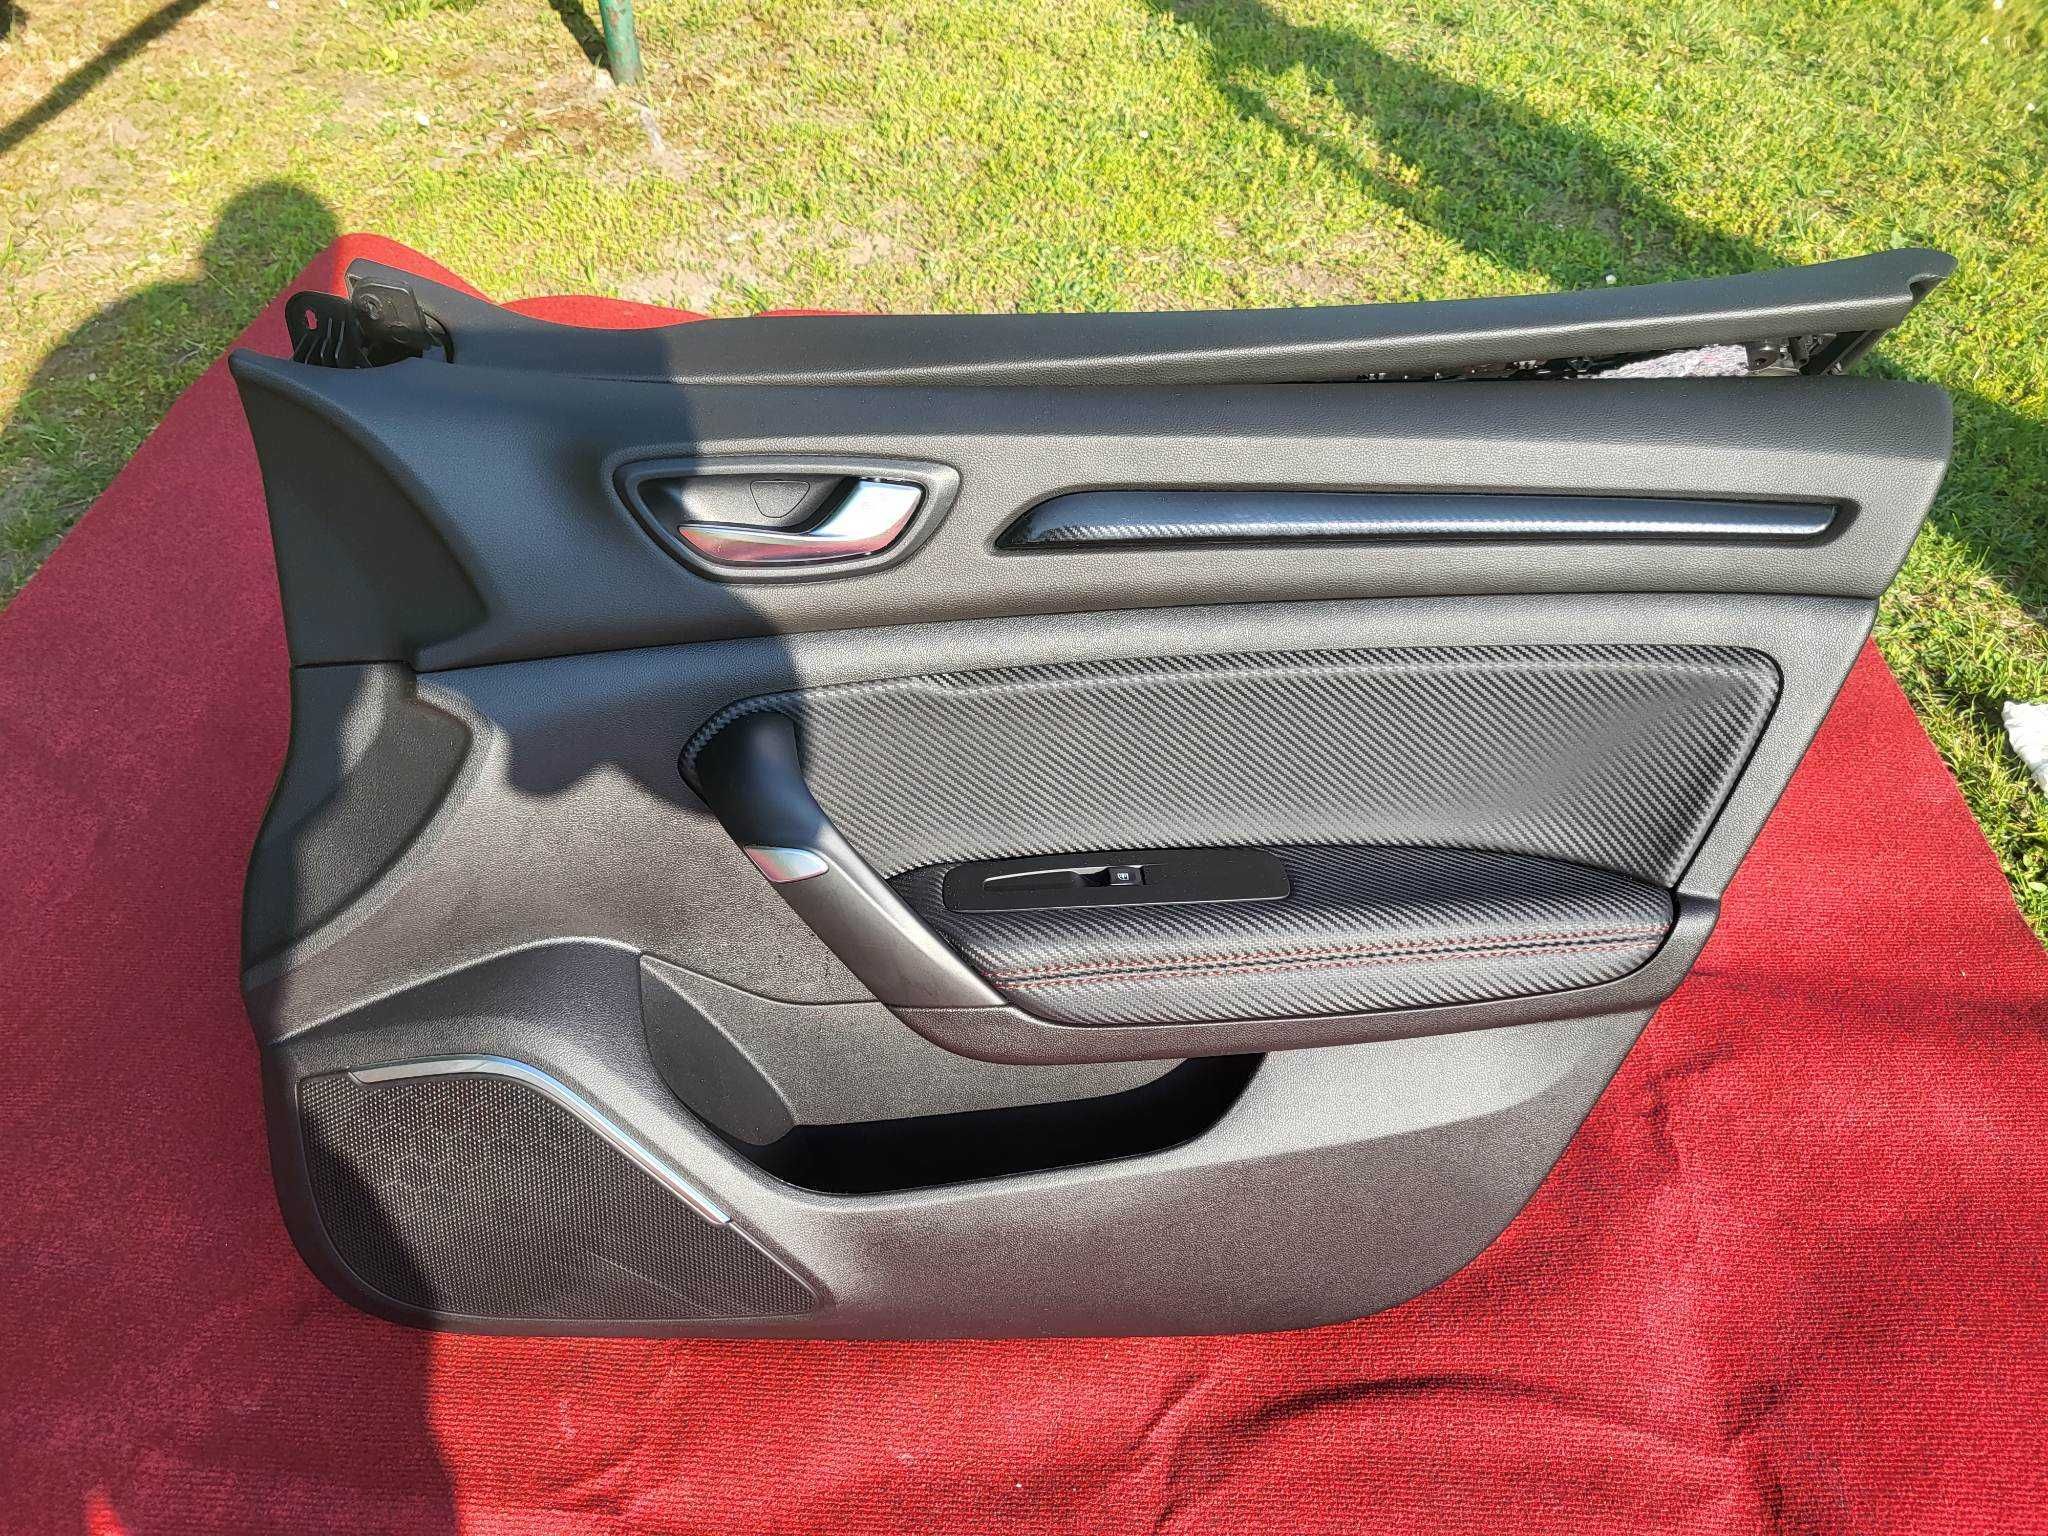 Oryginalny środek tapicerka do Renault MEGANE IV RS: boczki drzwi 4szt